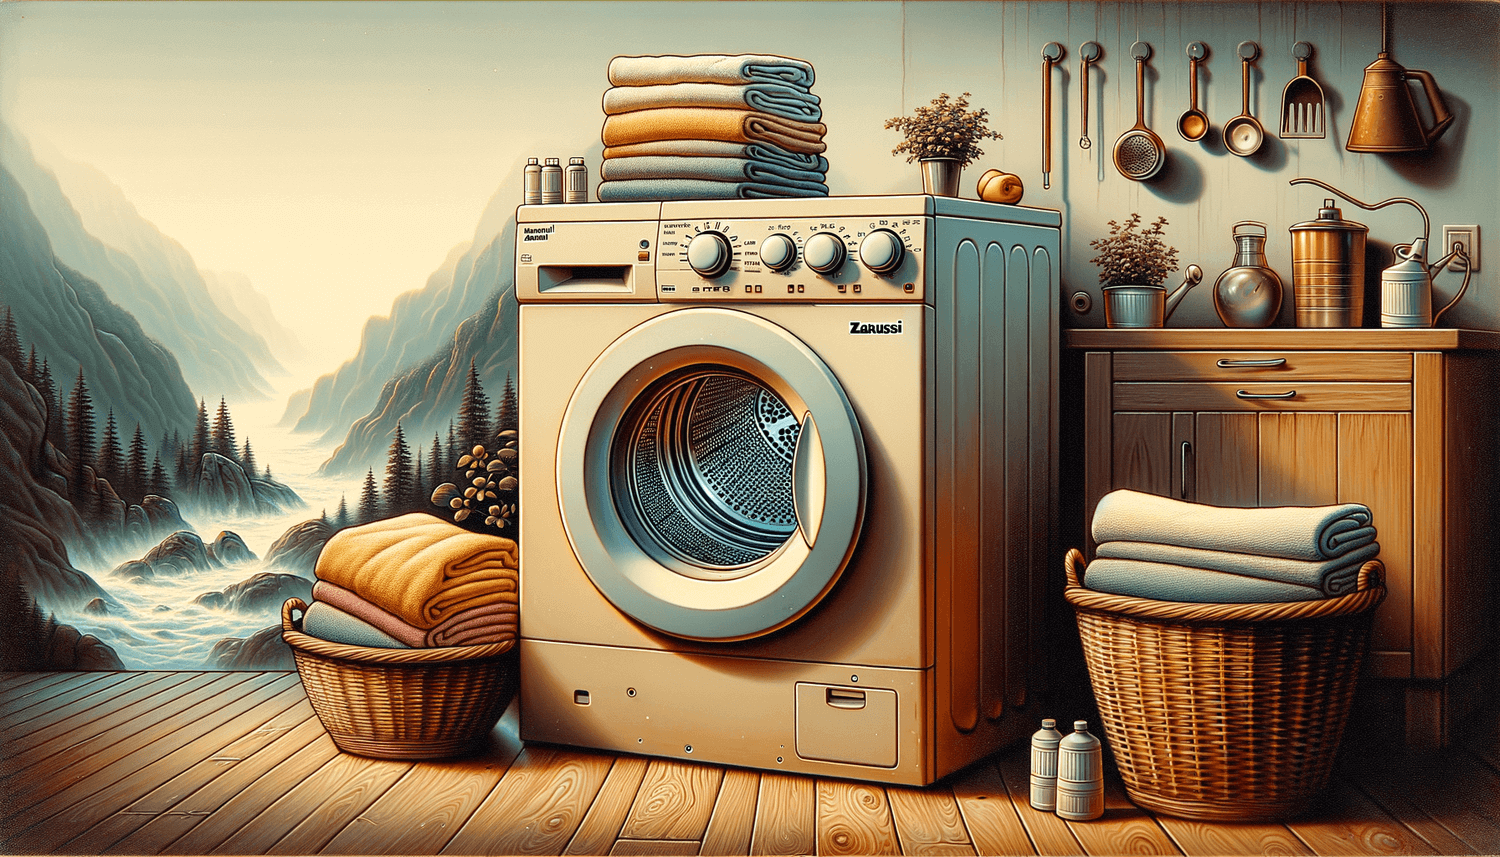 Zanussi Dryer Settings Explained - Settings King